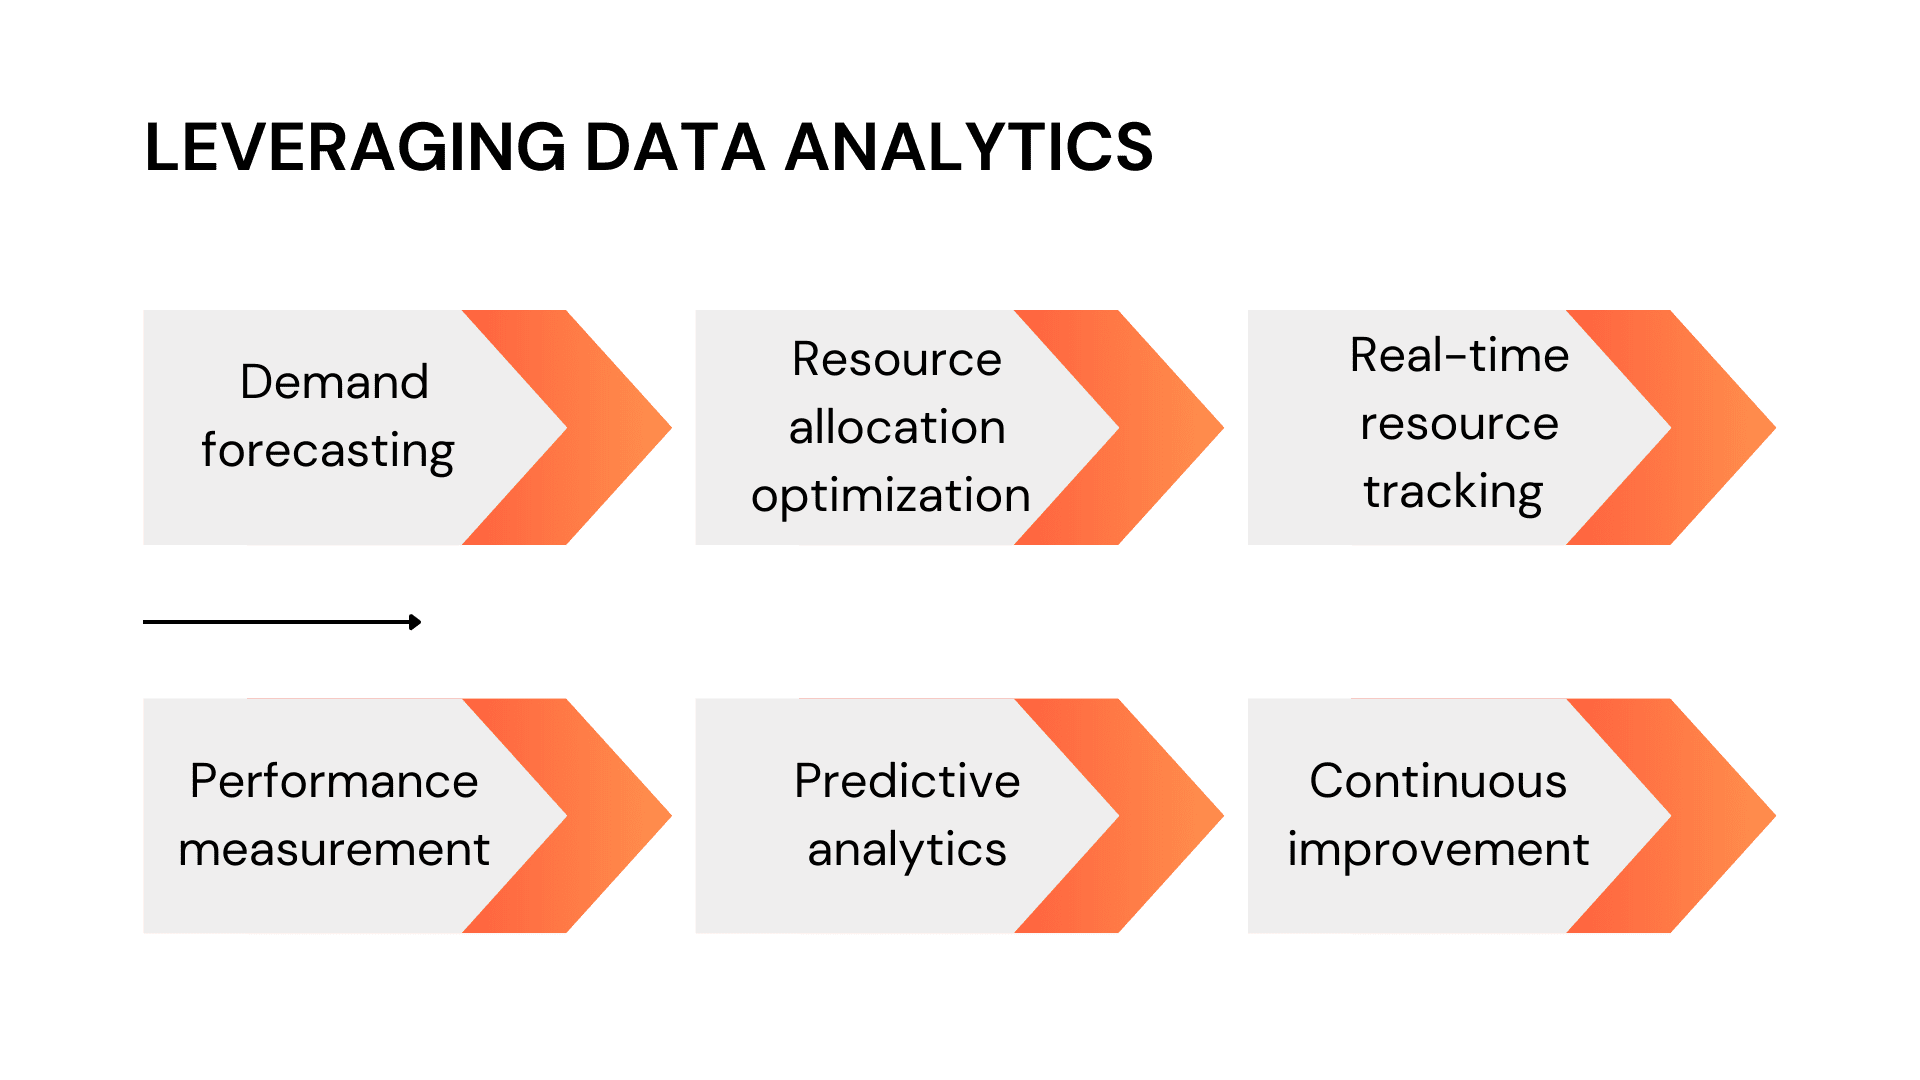 Summary of Data Analytics